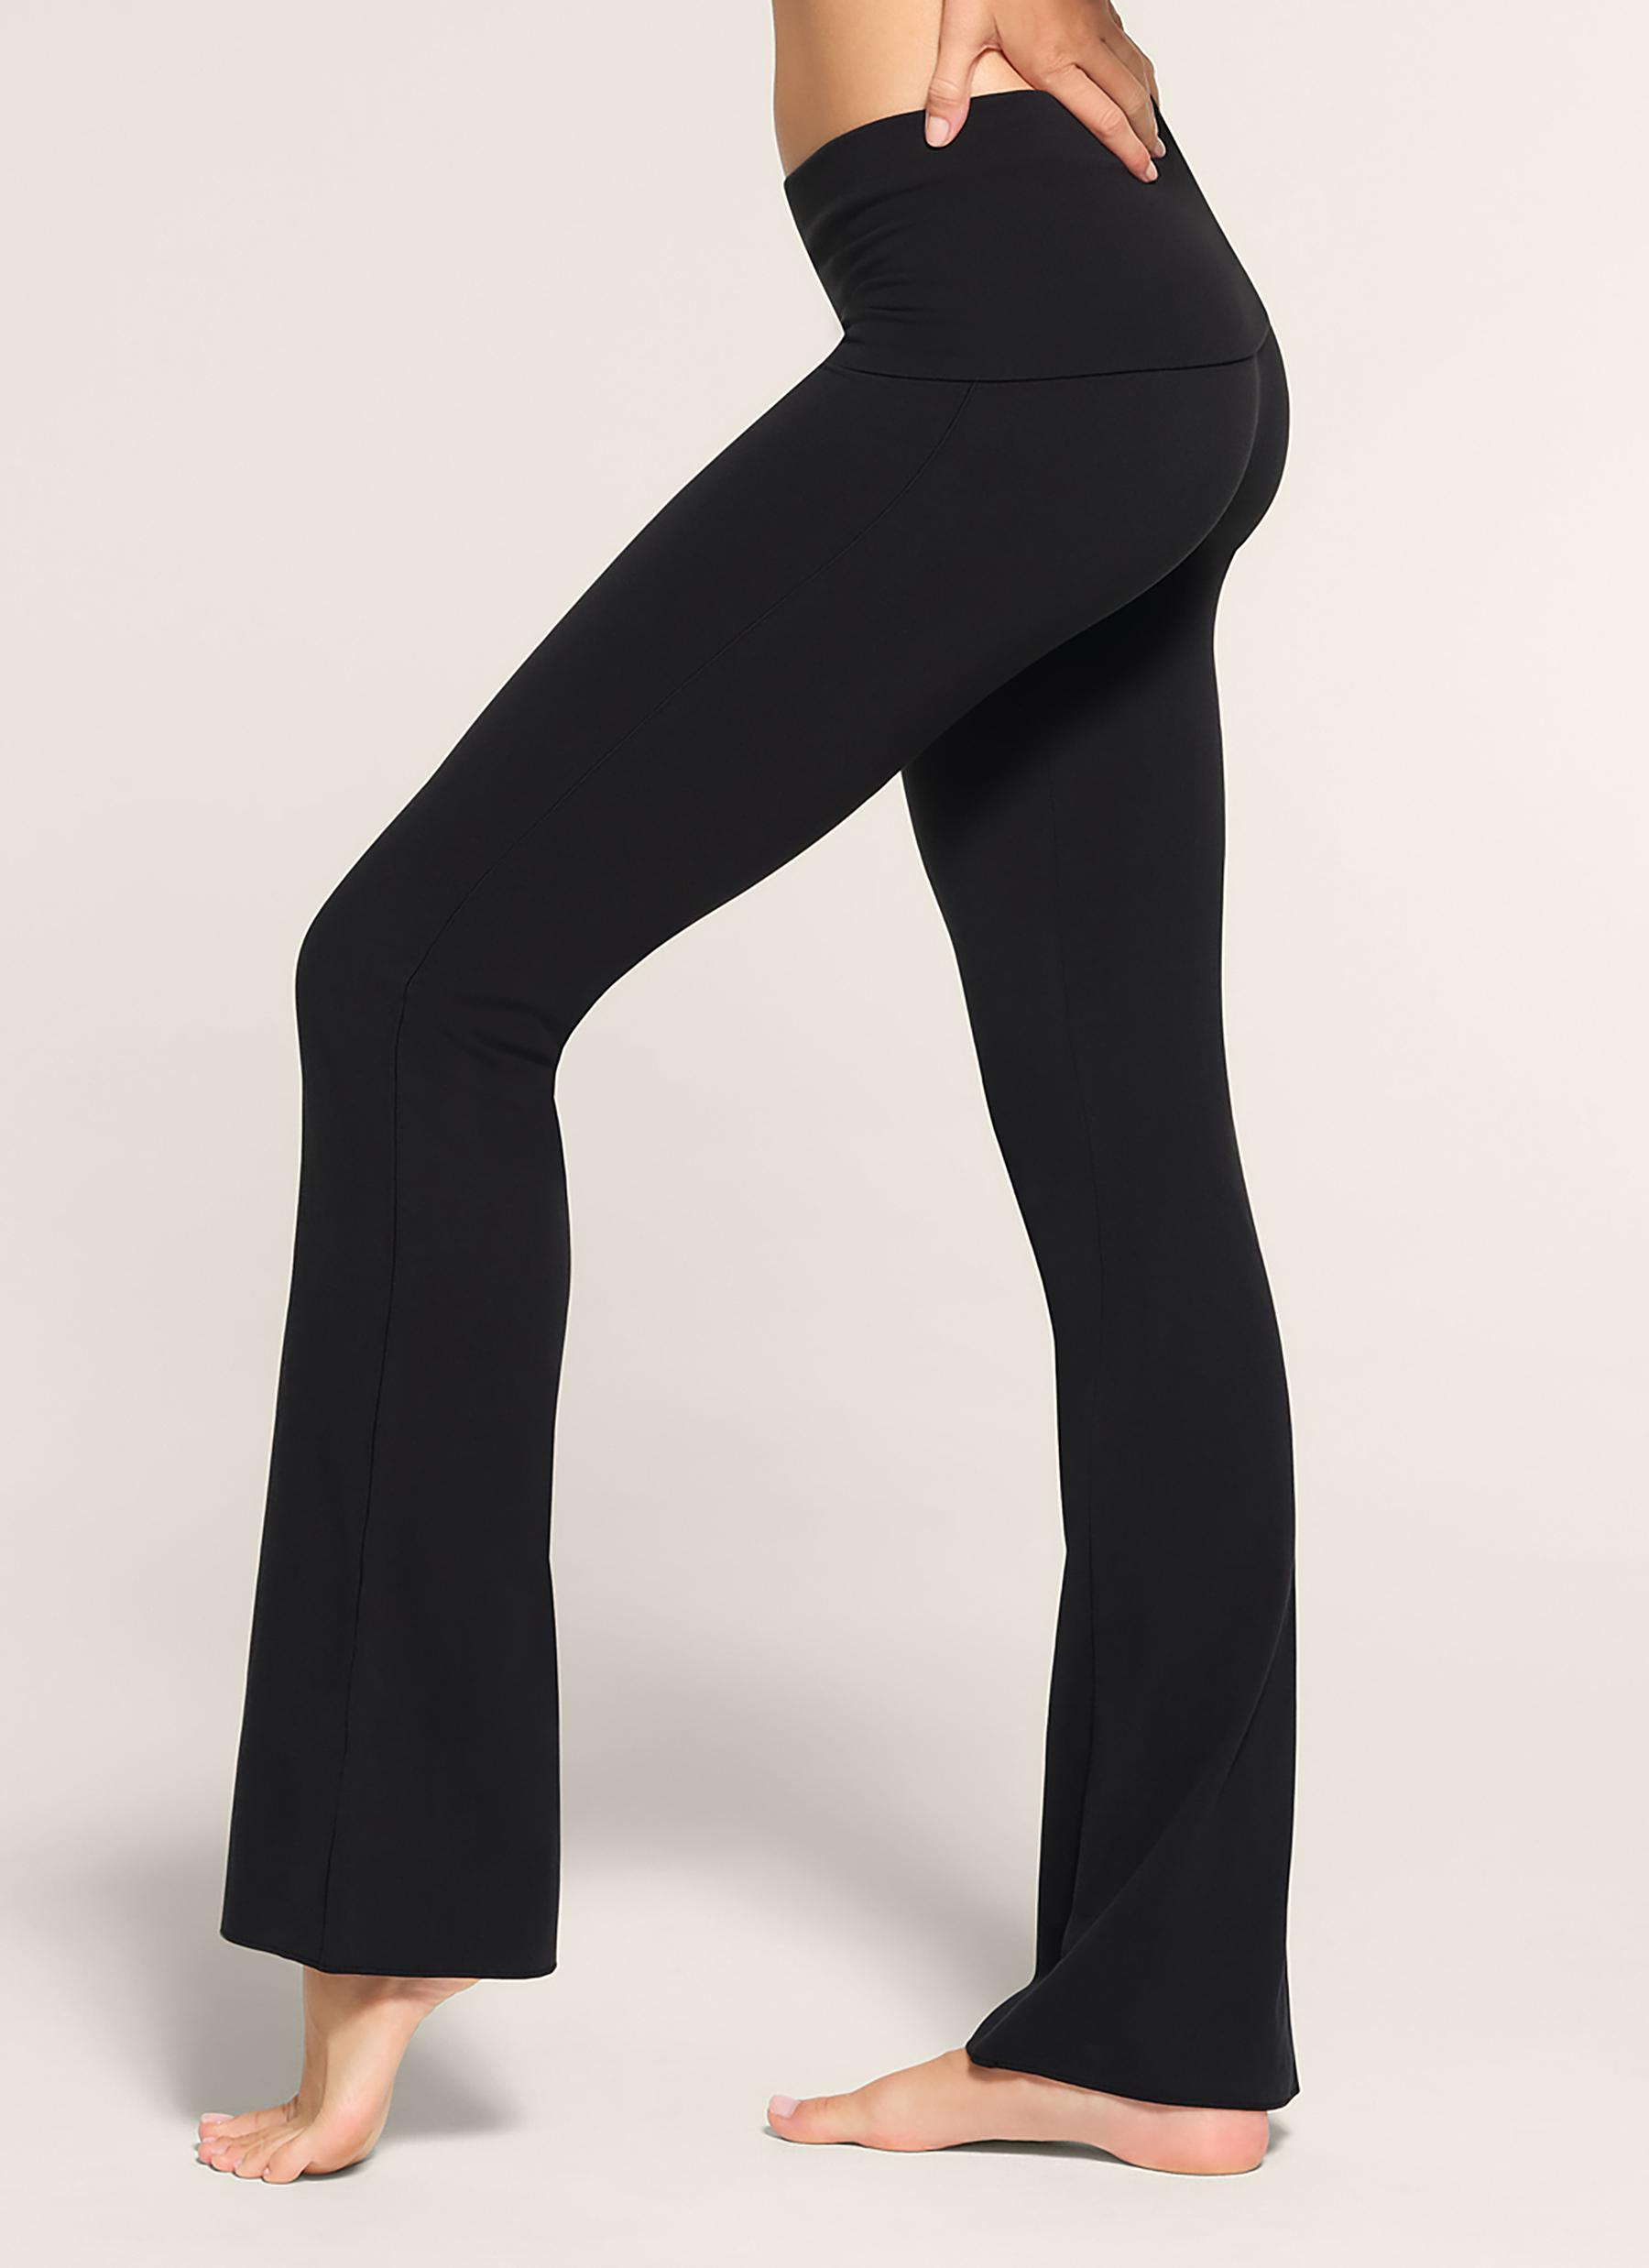 Skims Cotton Jersey Foldover Pants in Black